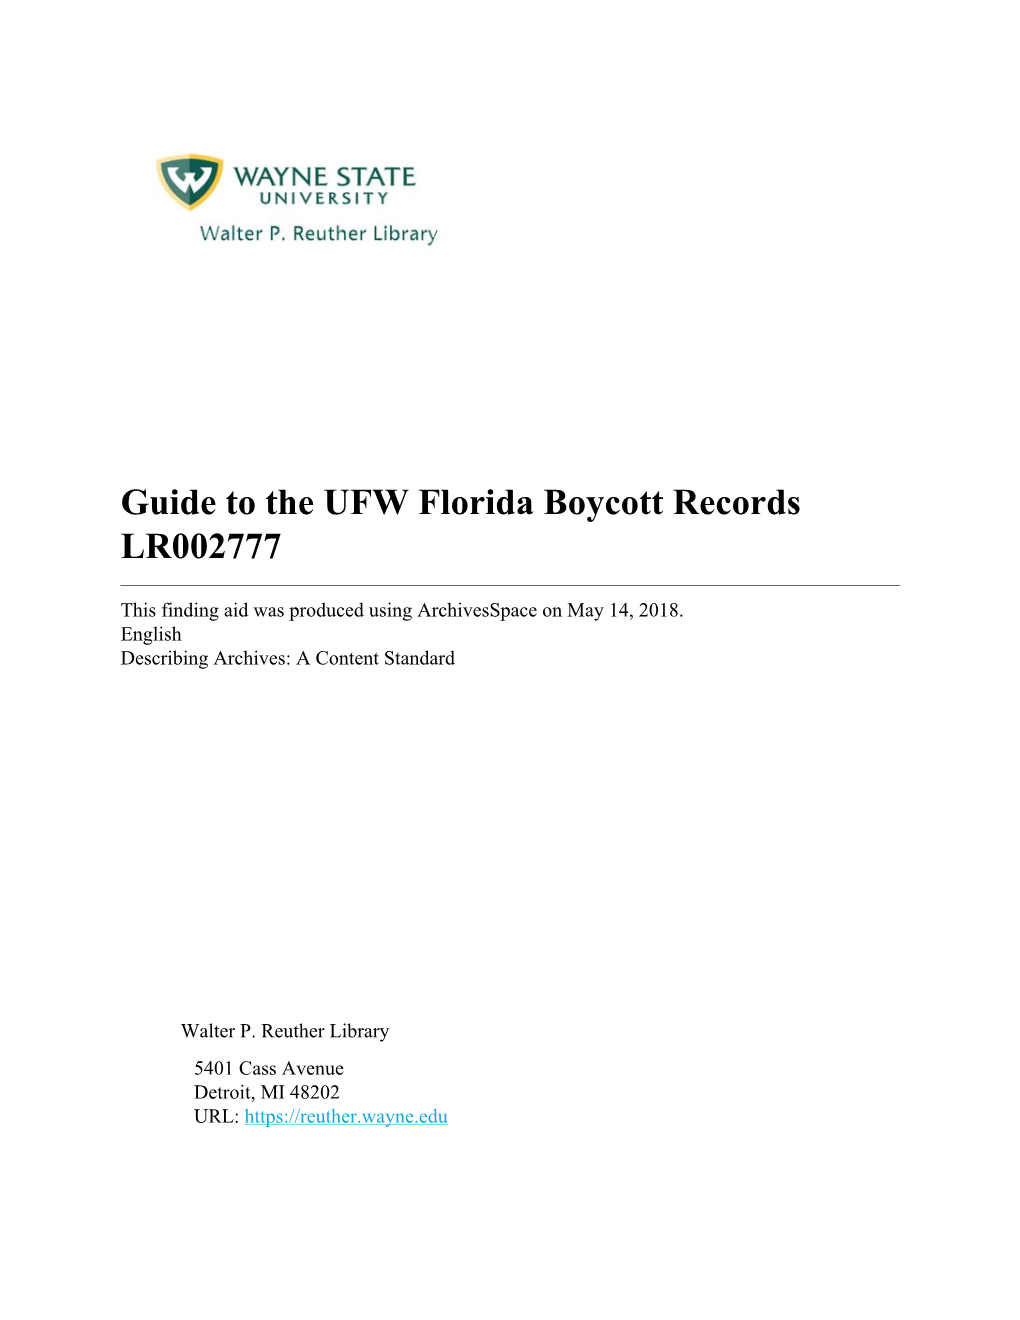 United Farm Workers Florida Boycott Records